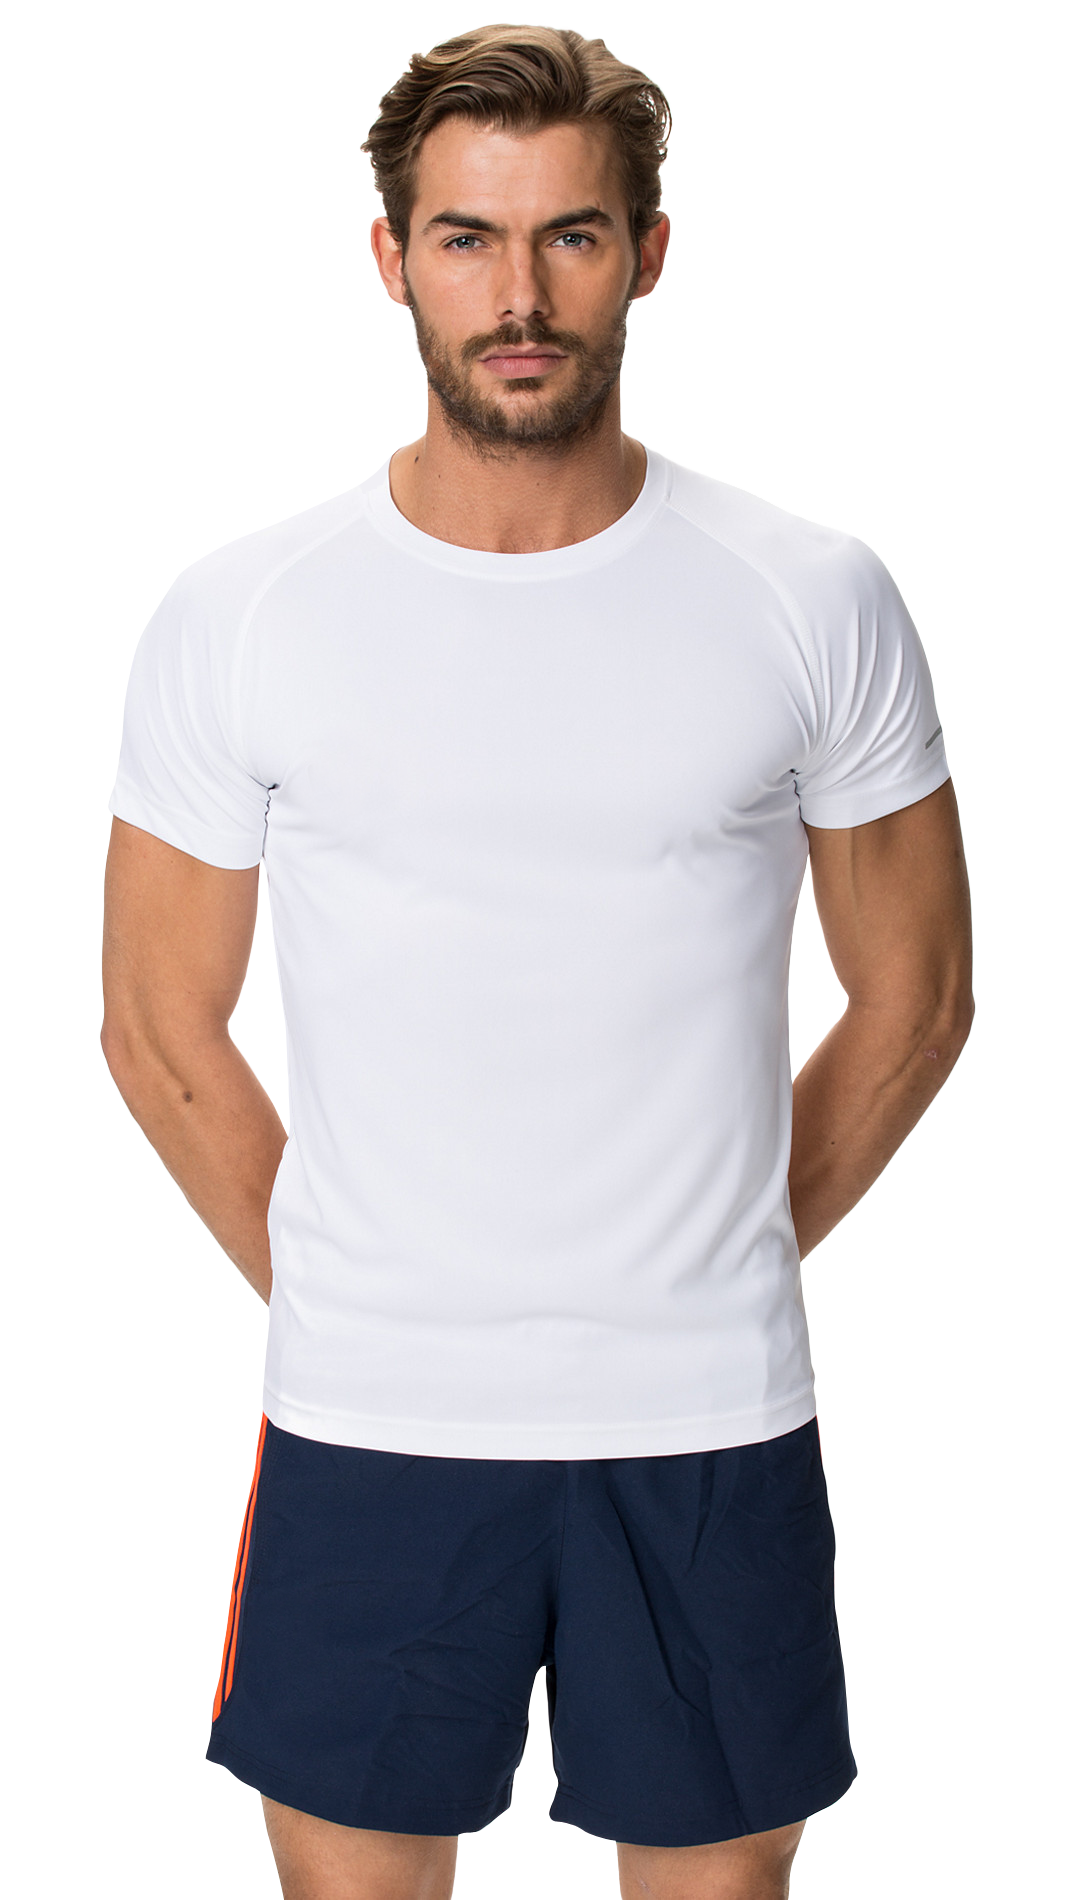 Athletic Man White Shirt Navy Shorts